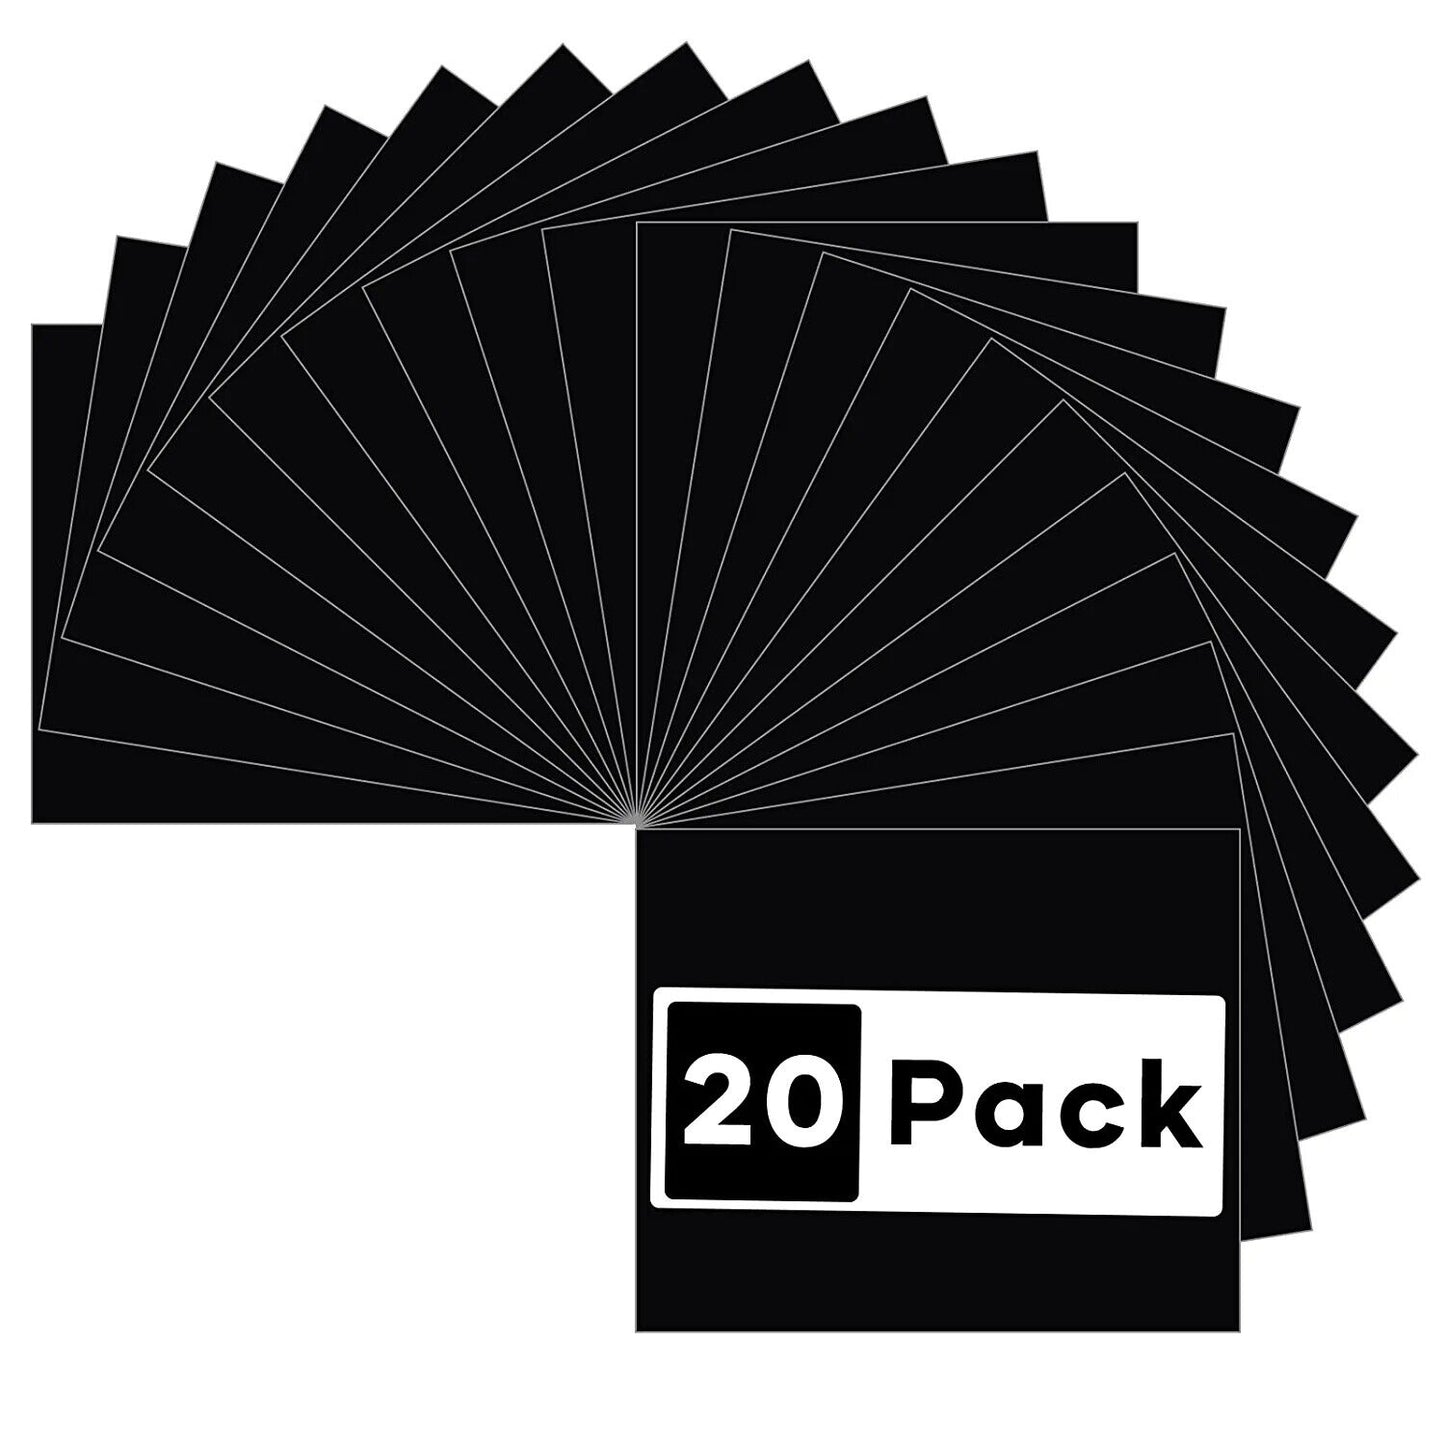 Heat Transfer Vinyl 4 packs, 12 x 10, 5 pages per pack - BLACK